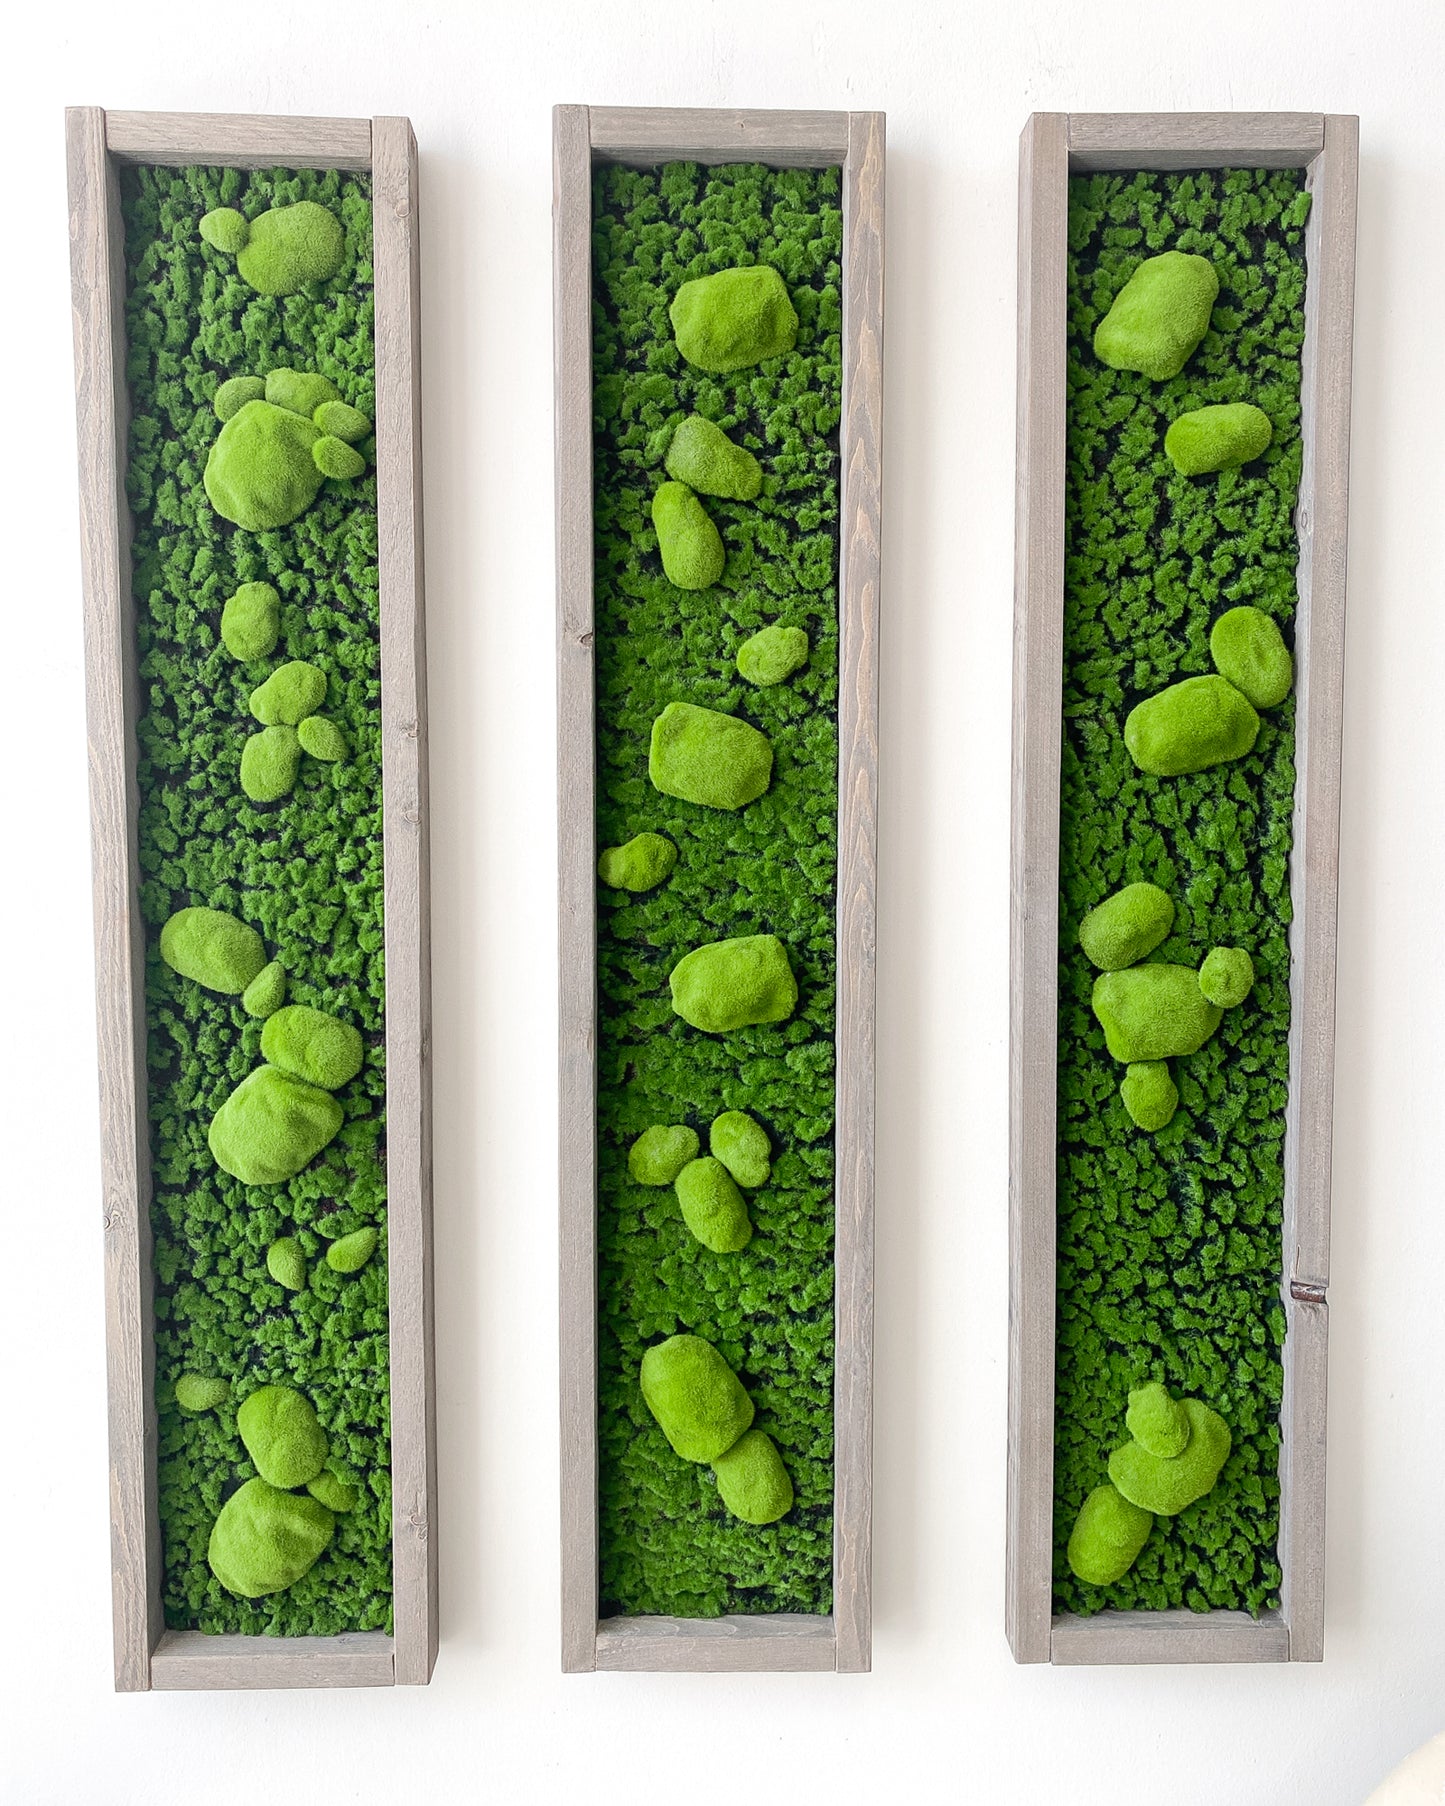 Moosbild/Mooswand/Mooswandkunst "GREEN BUNS" aus Realtouch Kunstmoss mit Fichtenholzrahmen